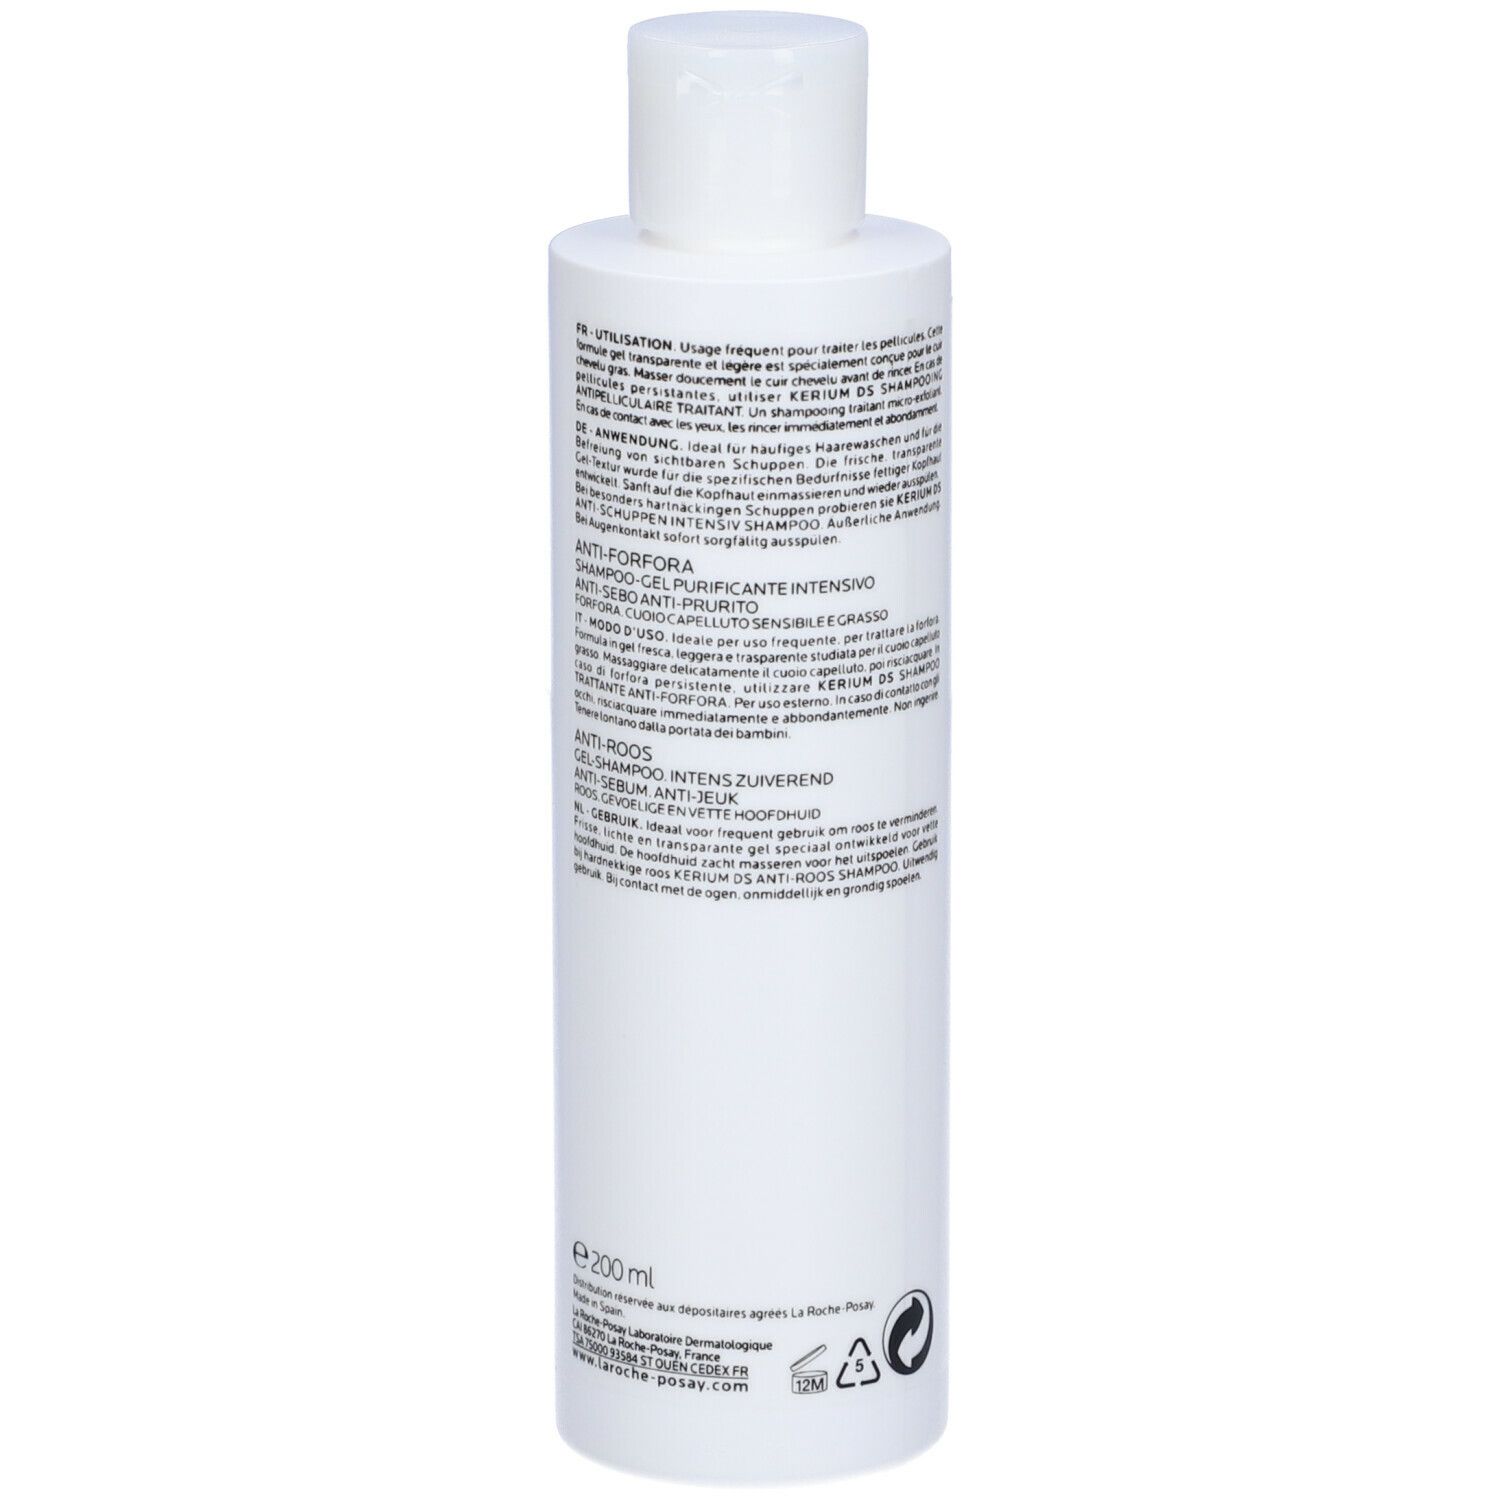 La Roche-Posay Kerium Shampoo antiforfora grassa 200 ml